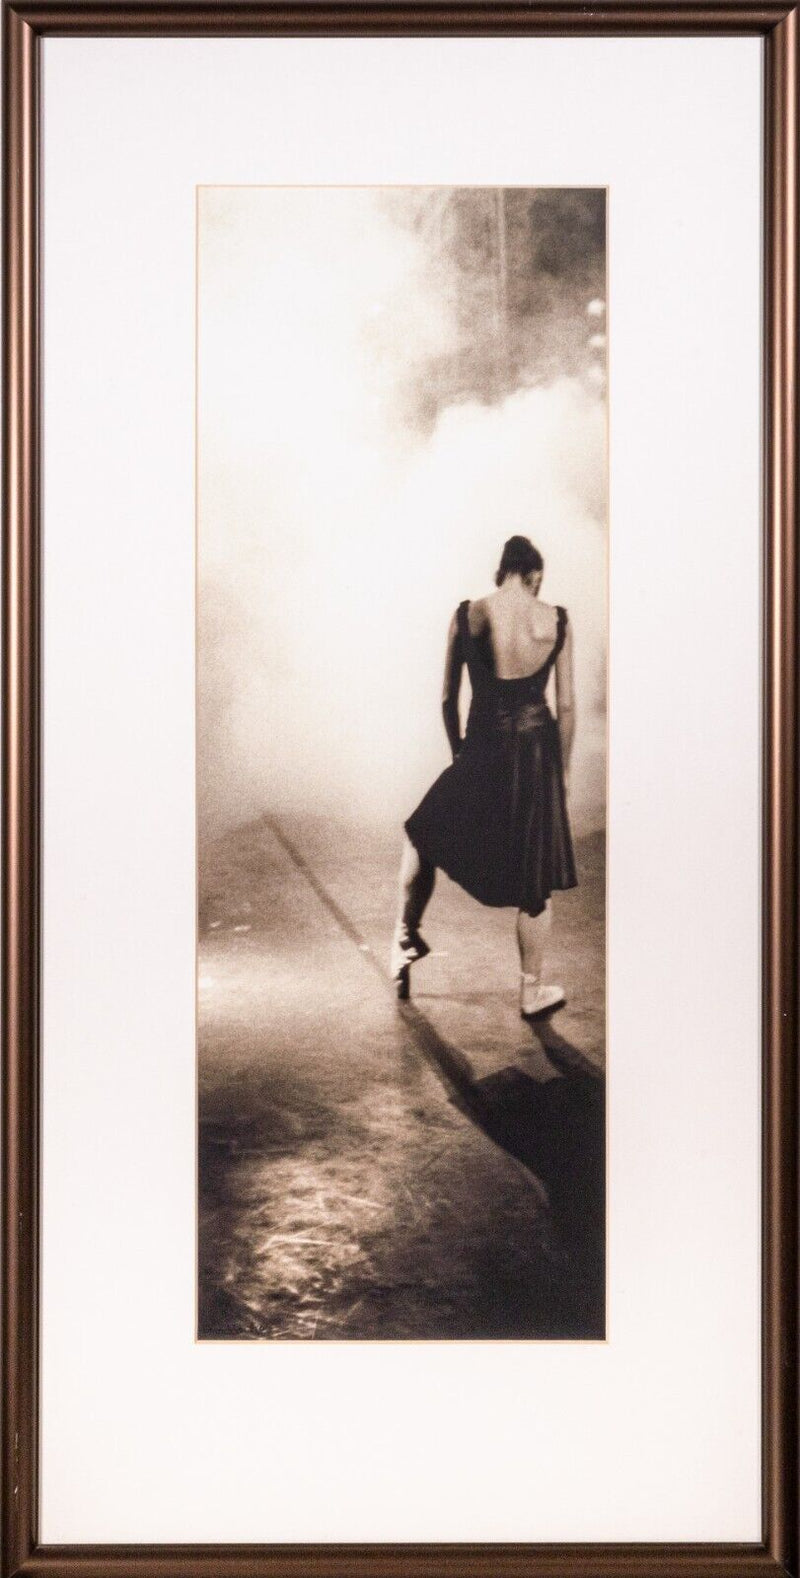 Ballerina Dancer Contemporary Fine Art Photography Print Signed Stoddard Framed